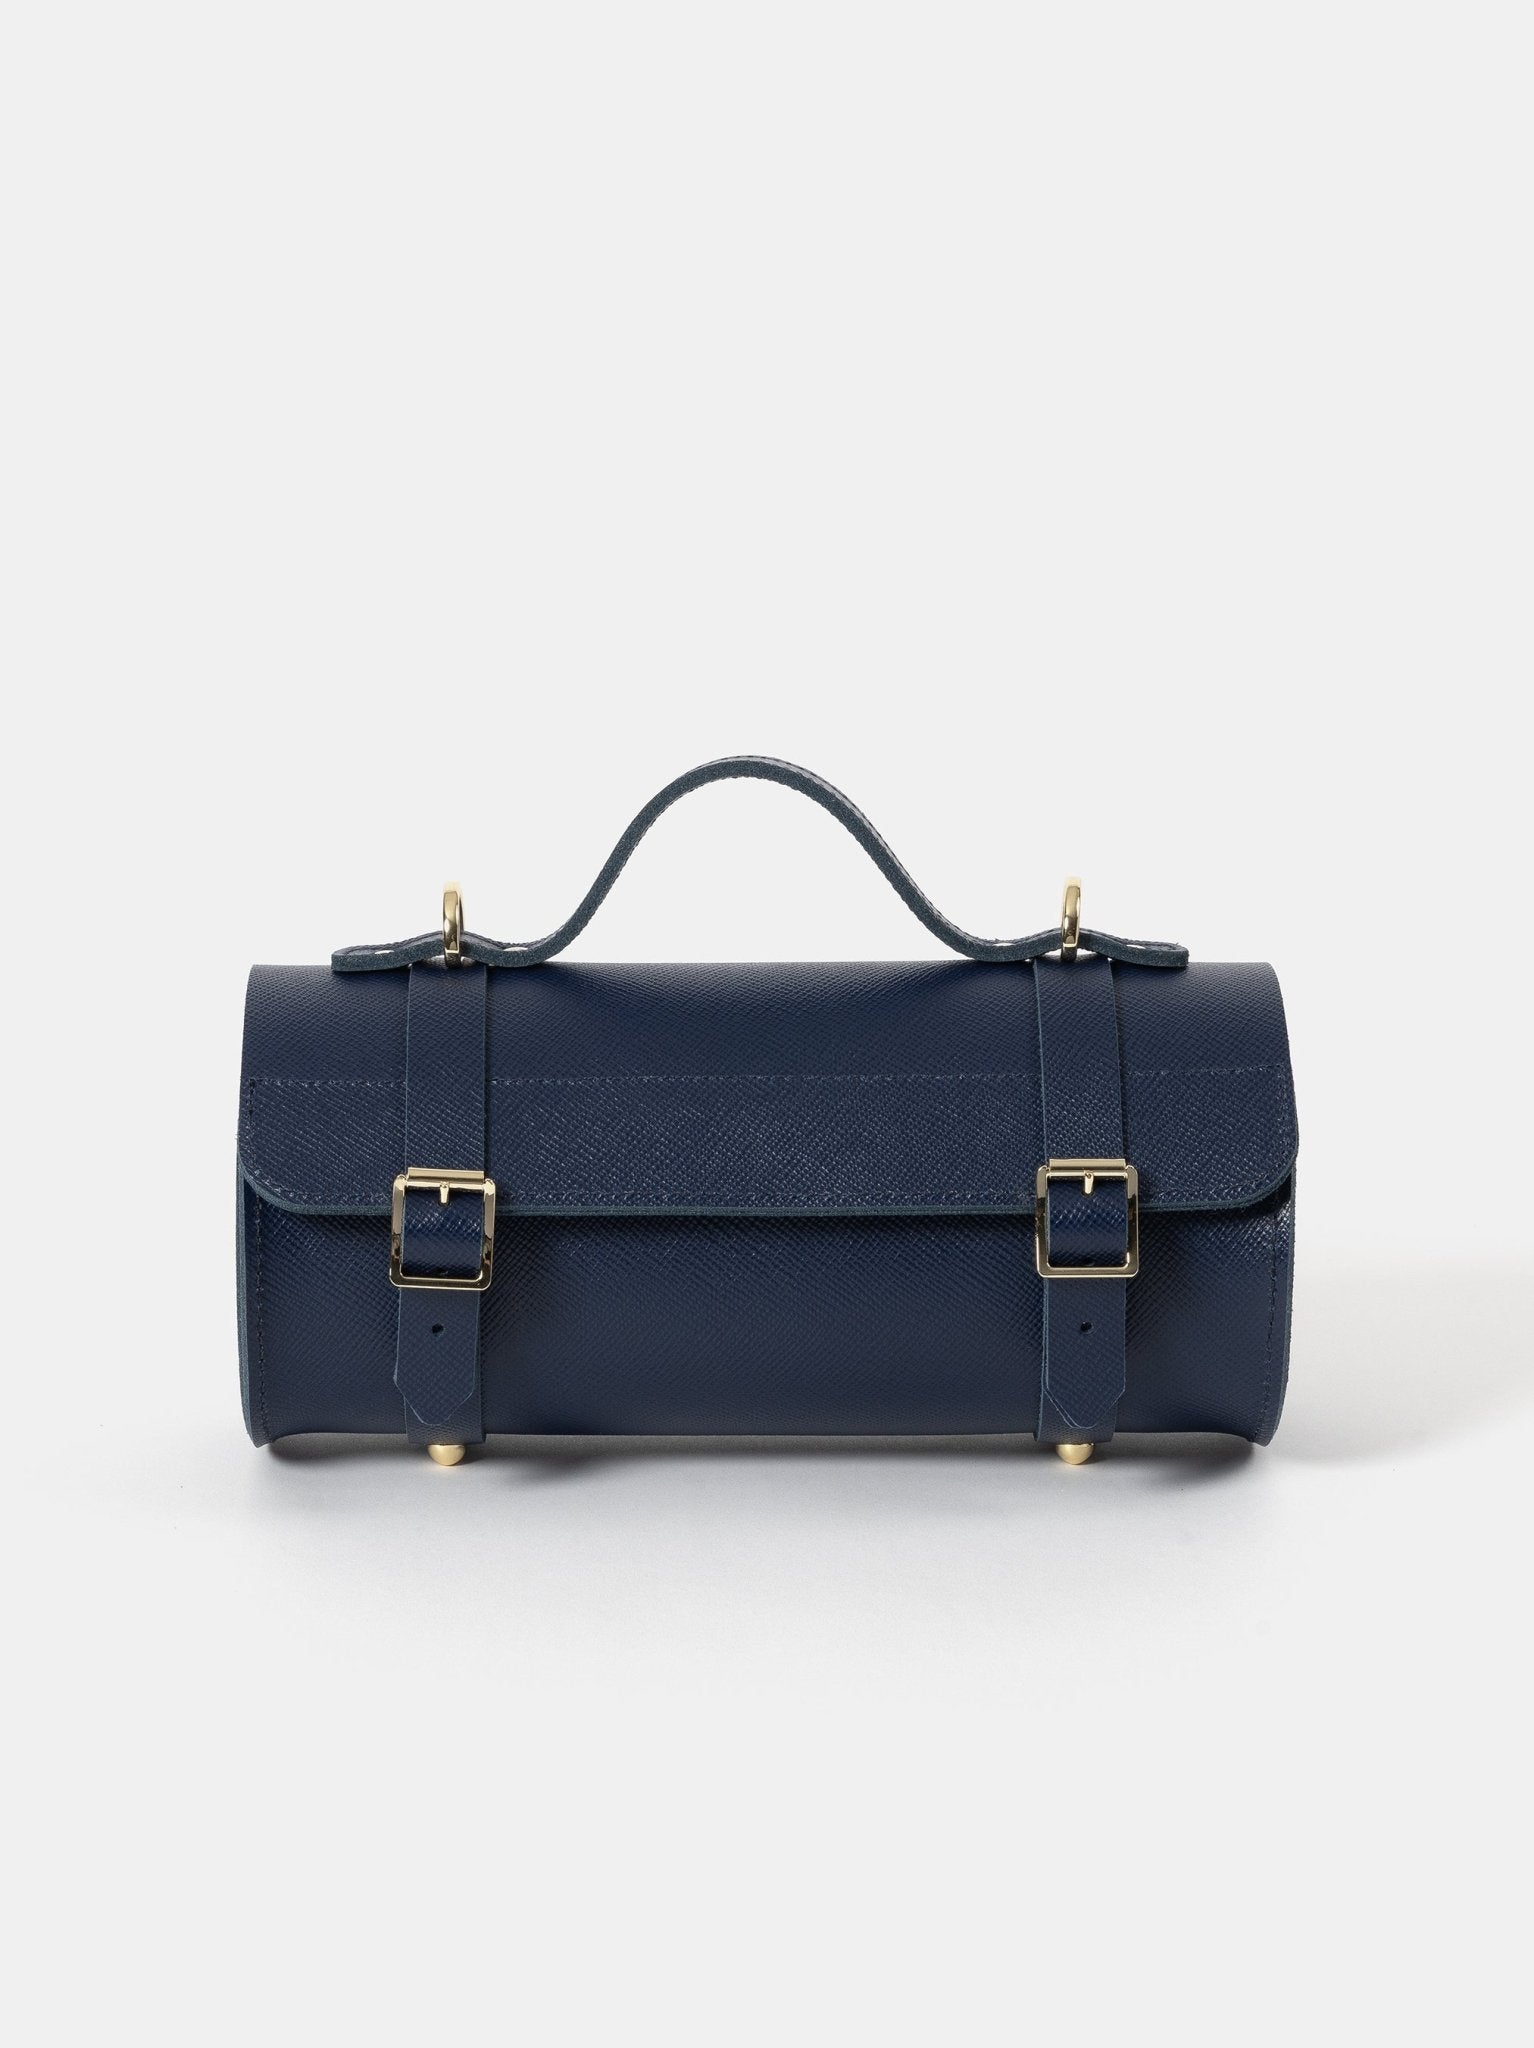 The Cambridge Satchel Co. Unisex Brown Handbag